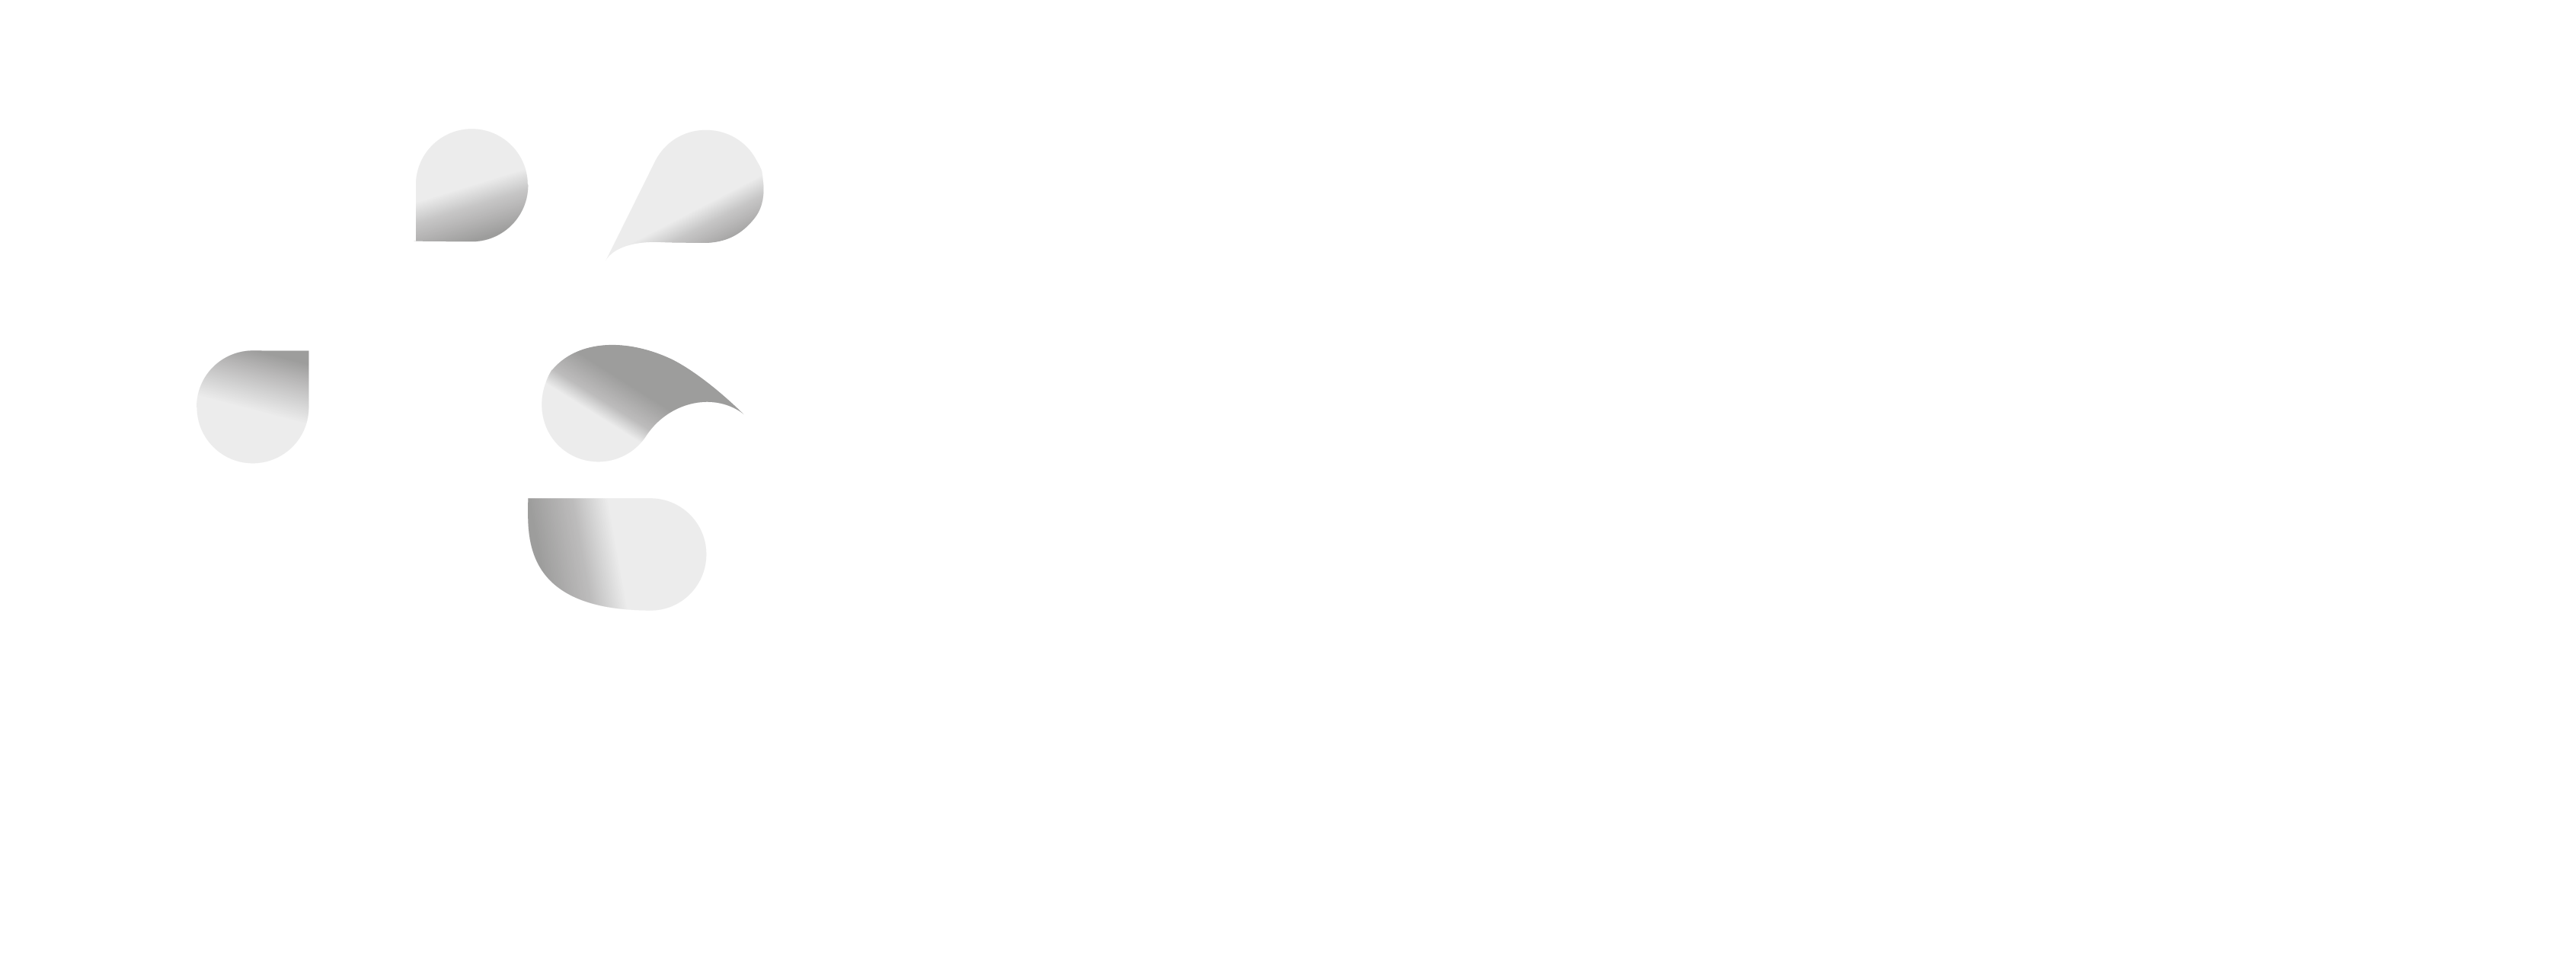 HEALTCARE LEADERSHIP ACADEMY